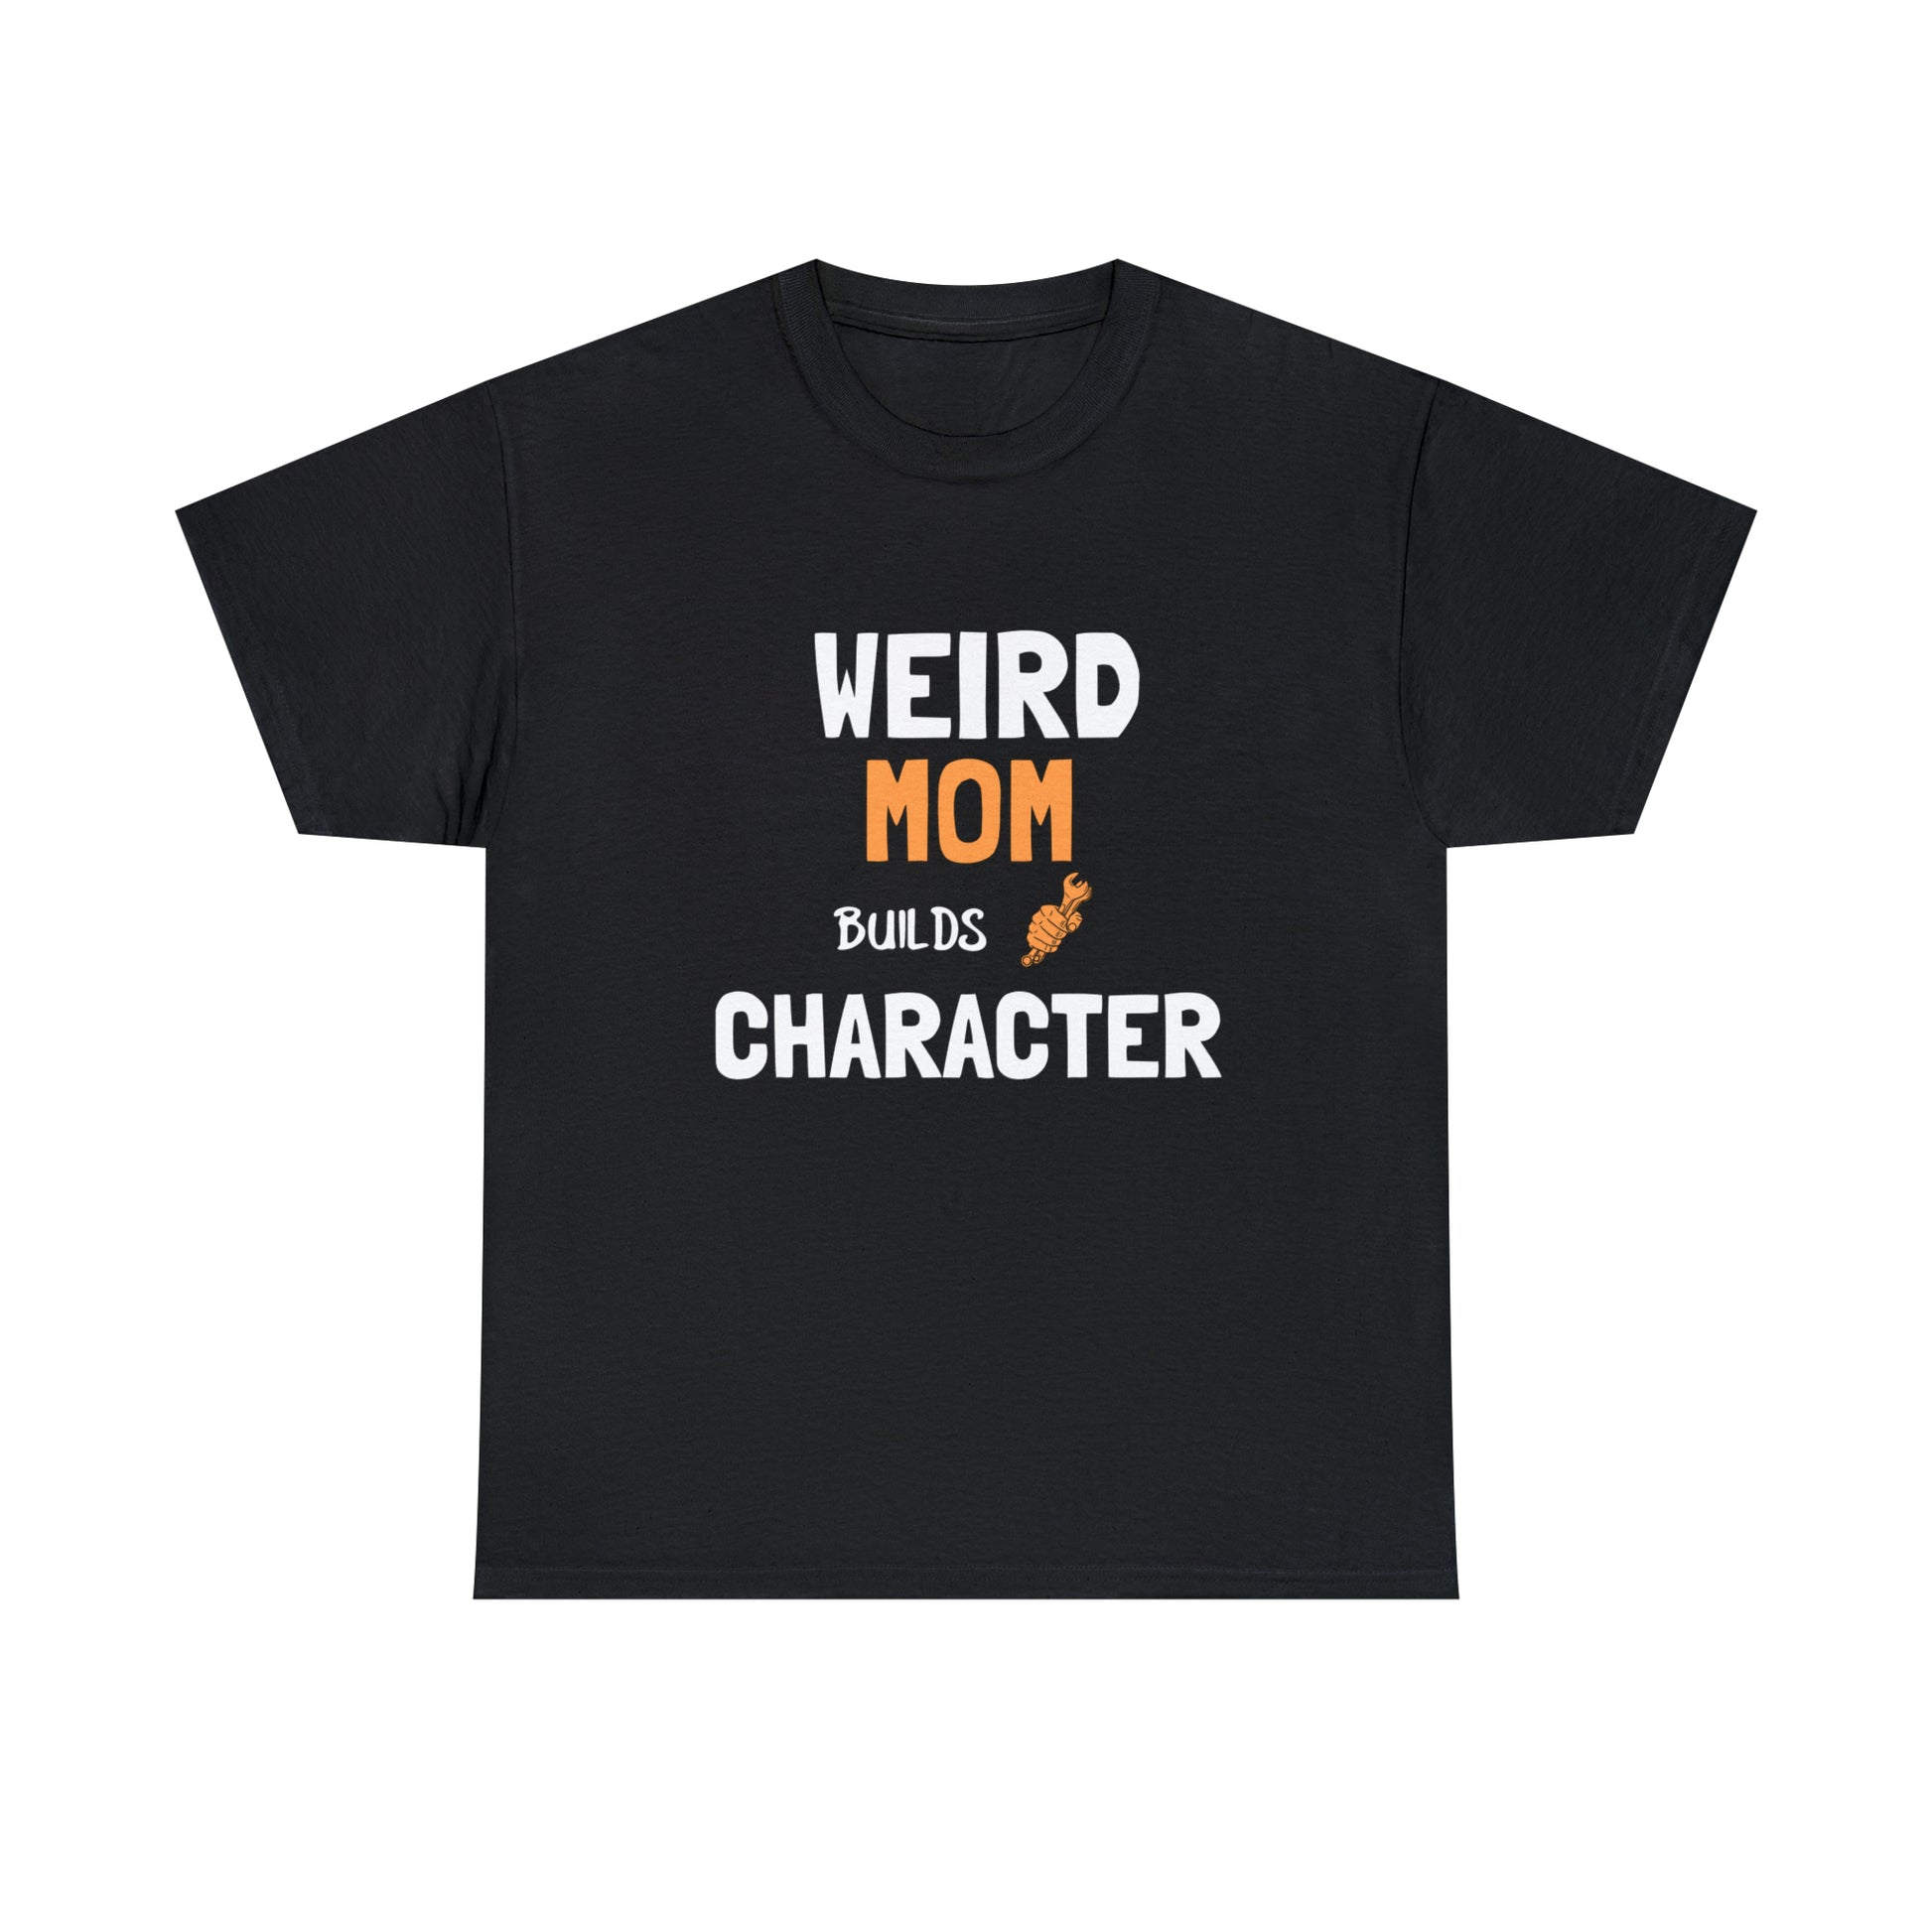 Unique character-building shirt